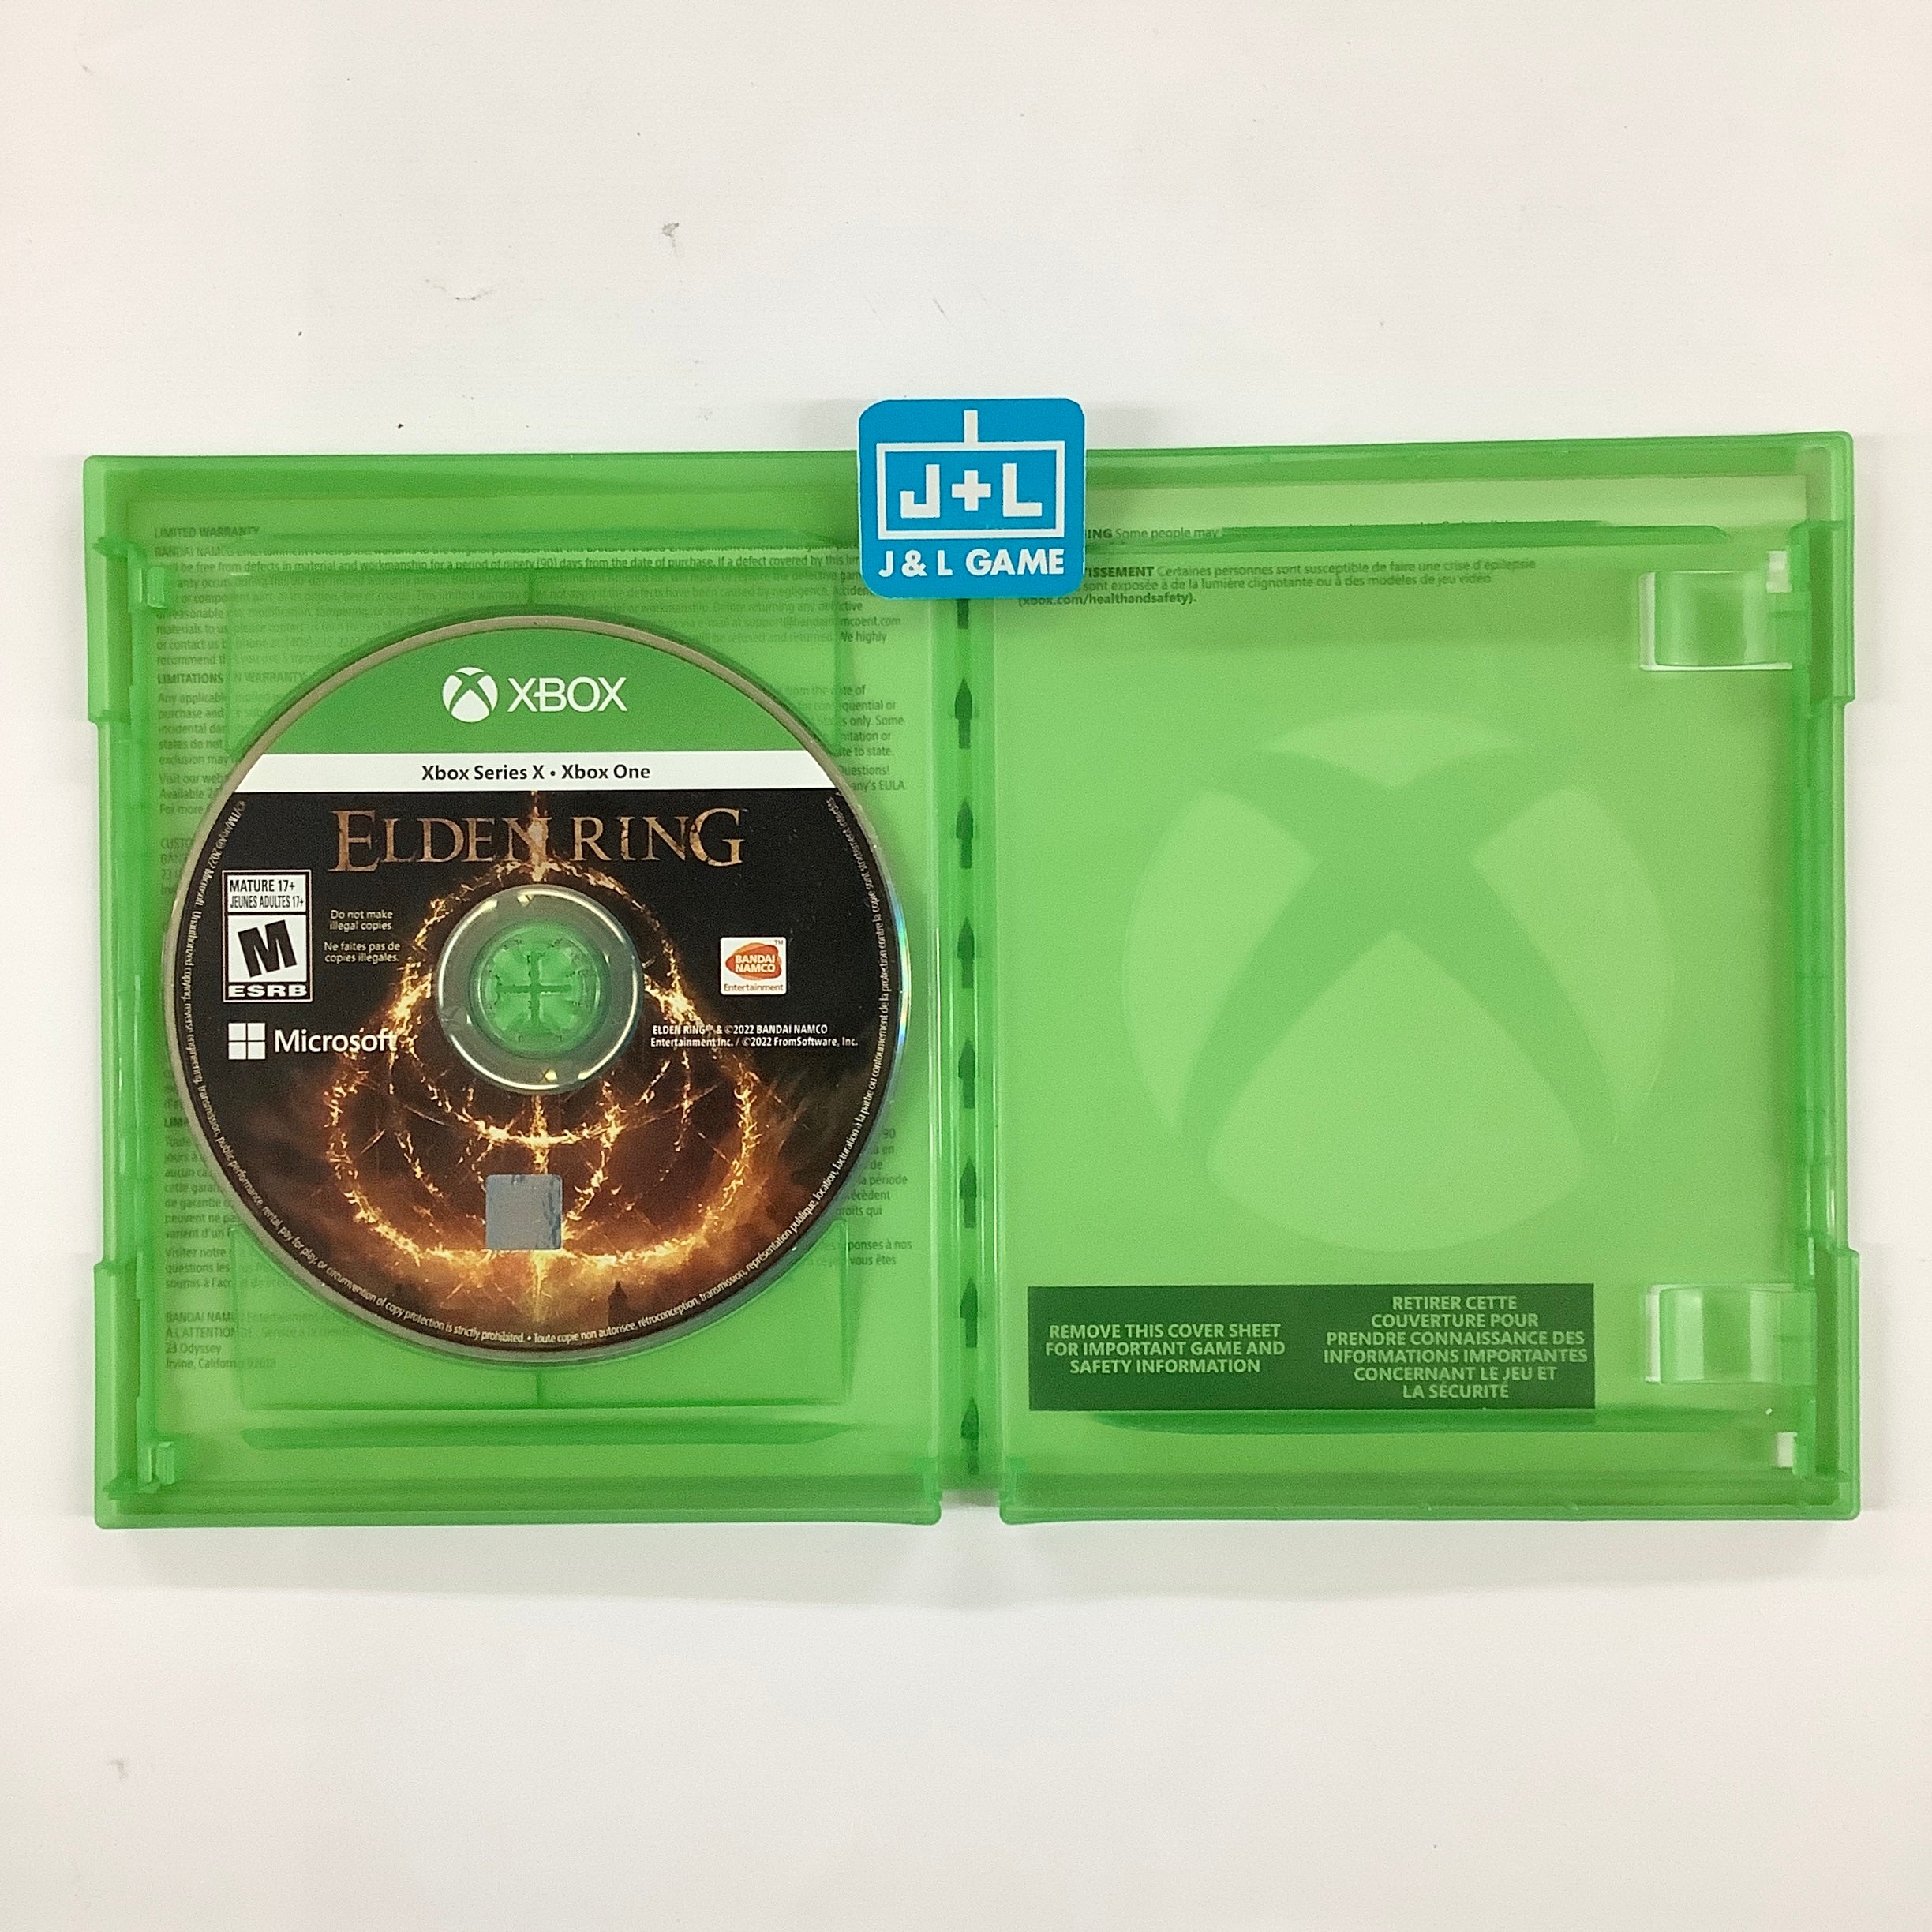 Elden Ring - (XSX) Xbox Series X [Pre-Owned] Video Games BANDAI NAMCO Entertainment   